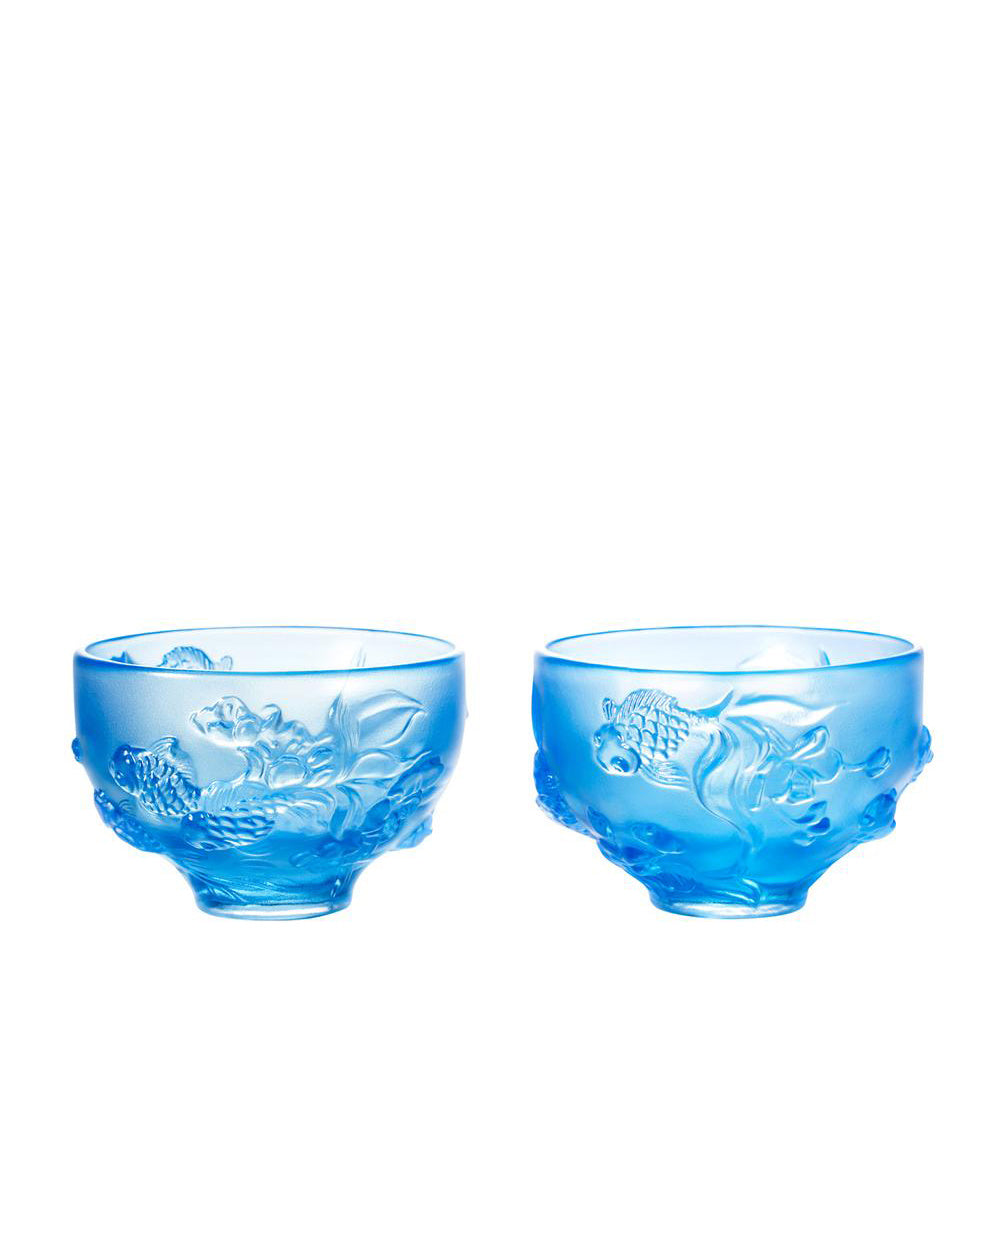 LIULI Crystal Art Crystal Goldfish Bowl and Chopsticks set, The Joy of Fish (Blue)